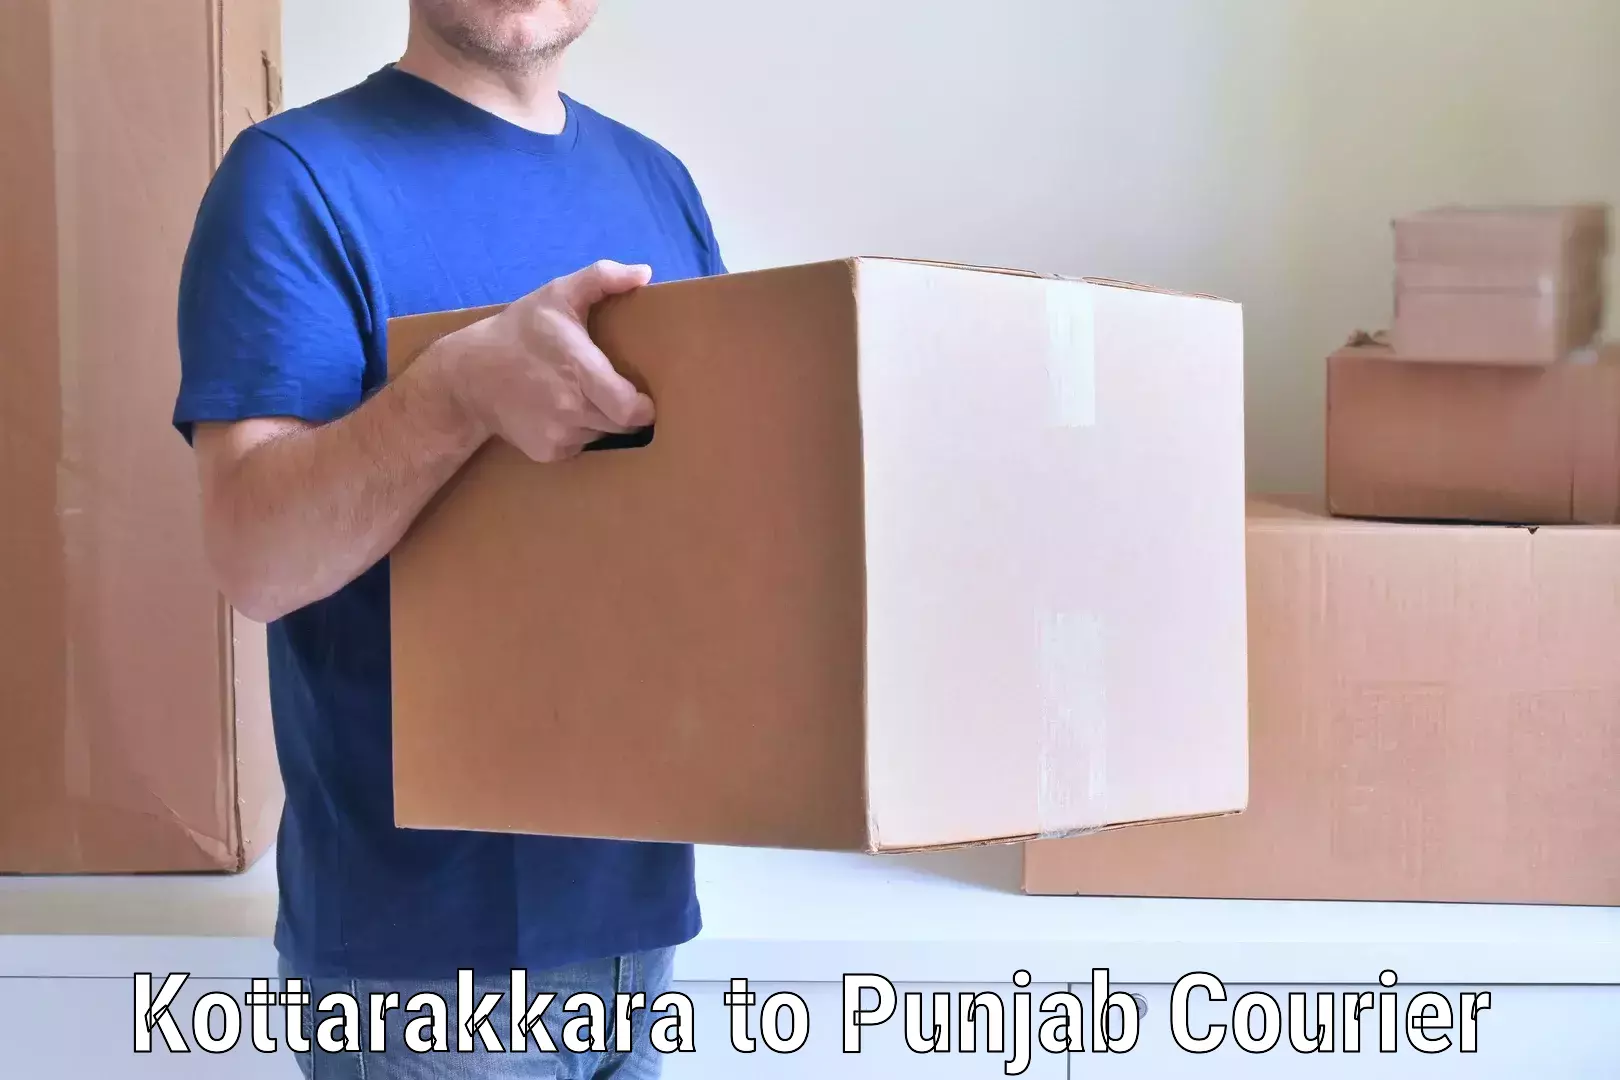 Furniture delivery service Kottarakkara to Bathinda